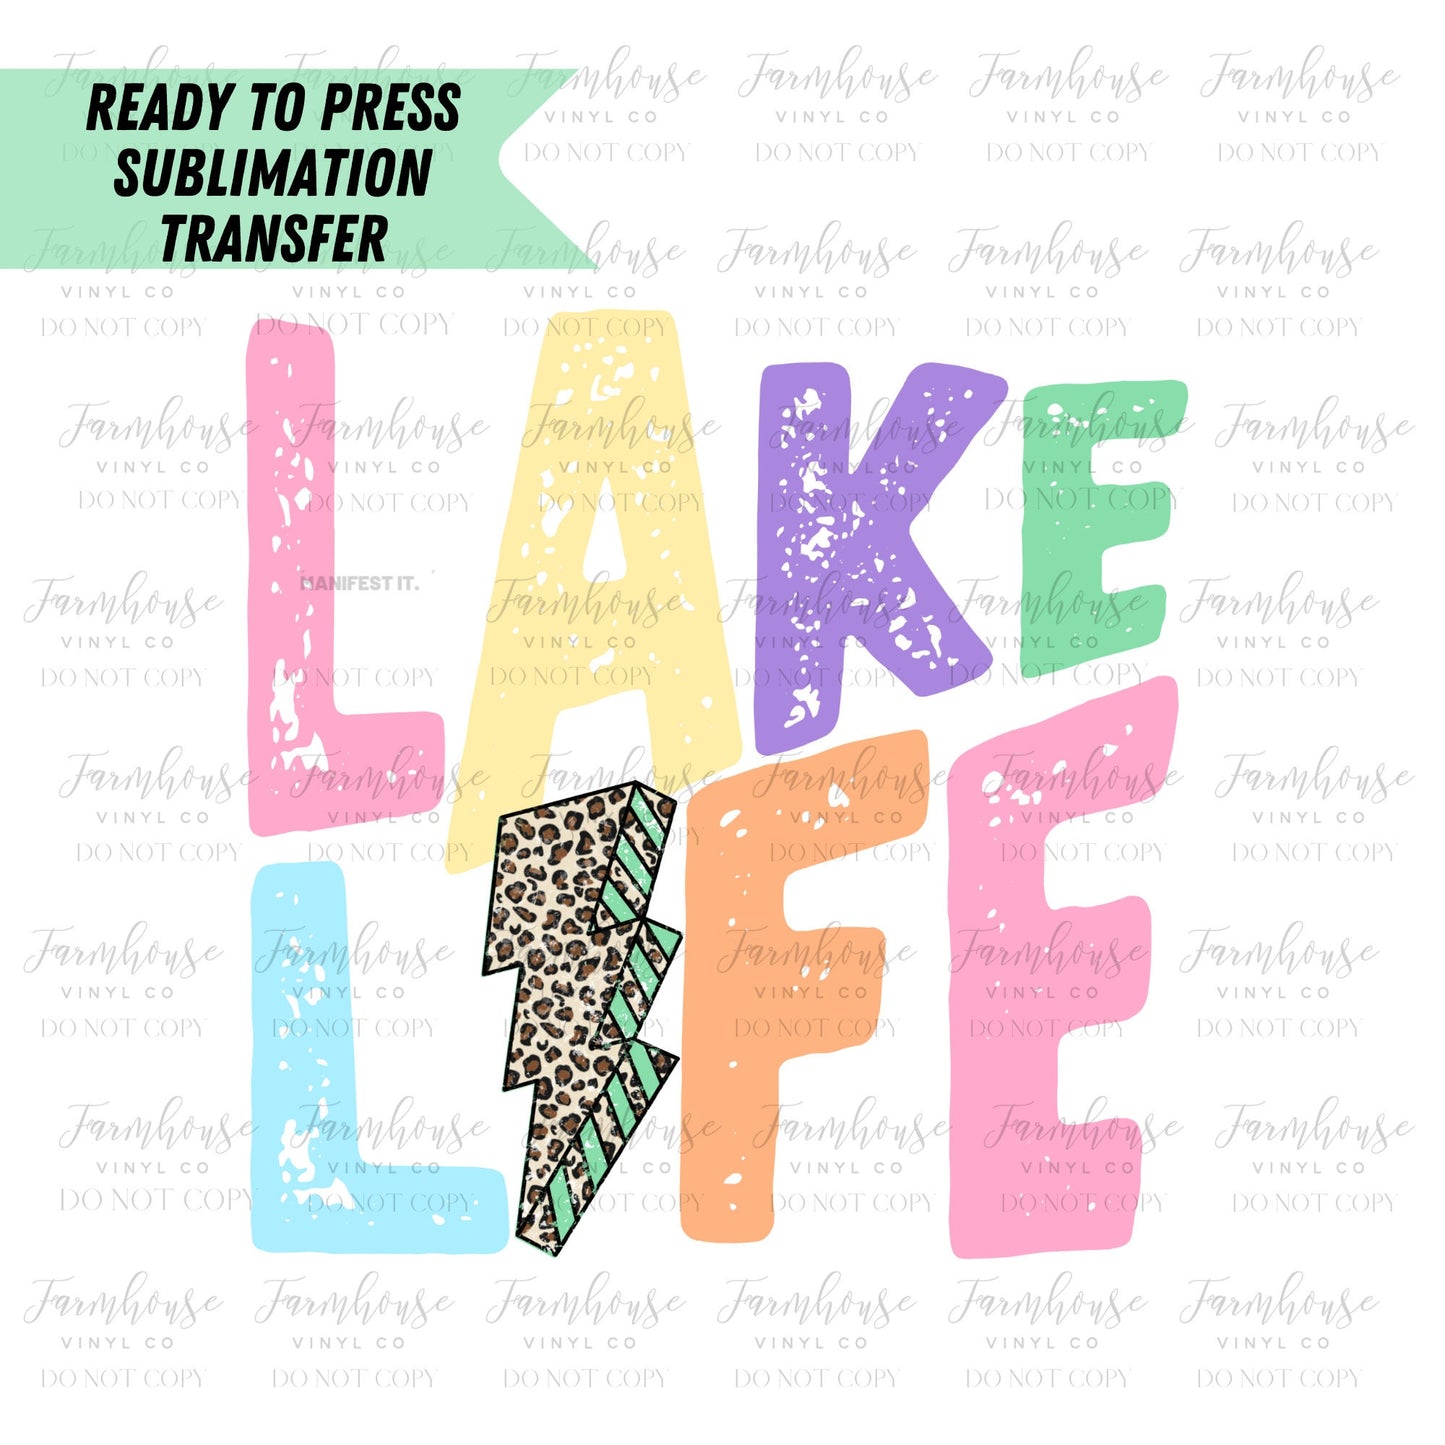 Lake Life Distressed Ready To Press Sublimation Transfer - Farmhouse Vinyl Co